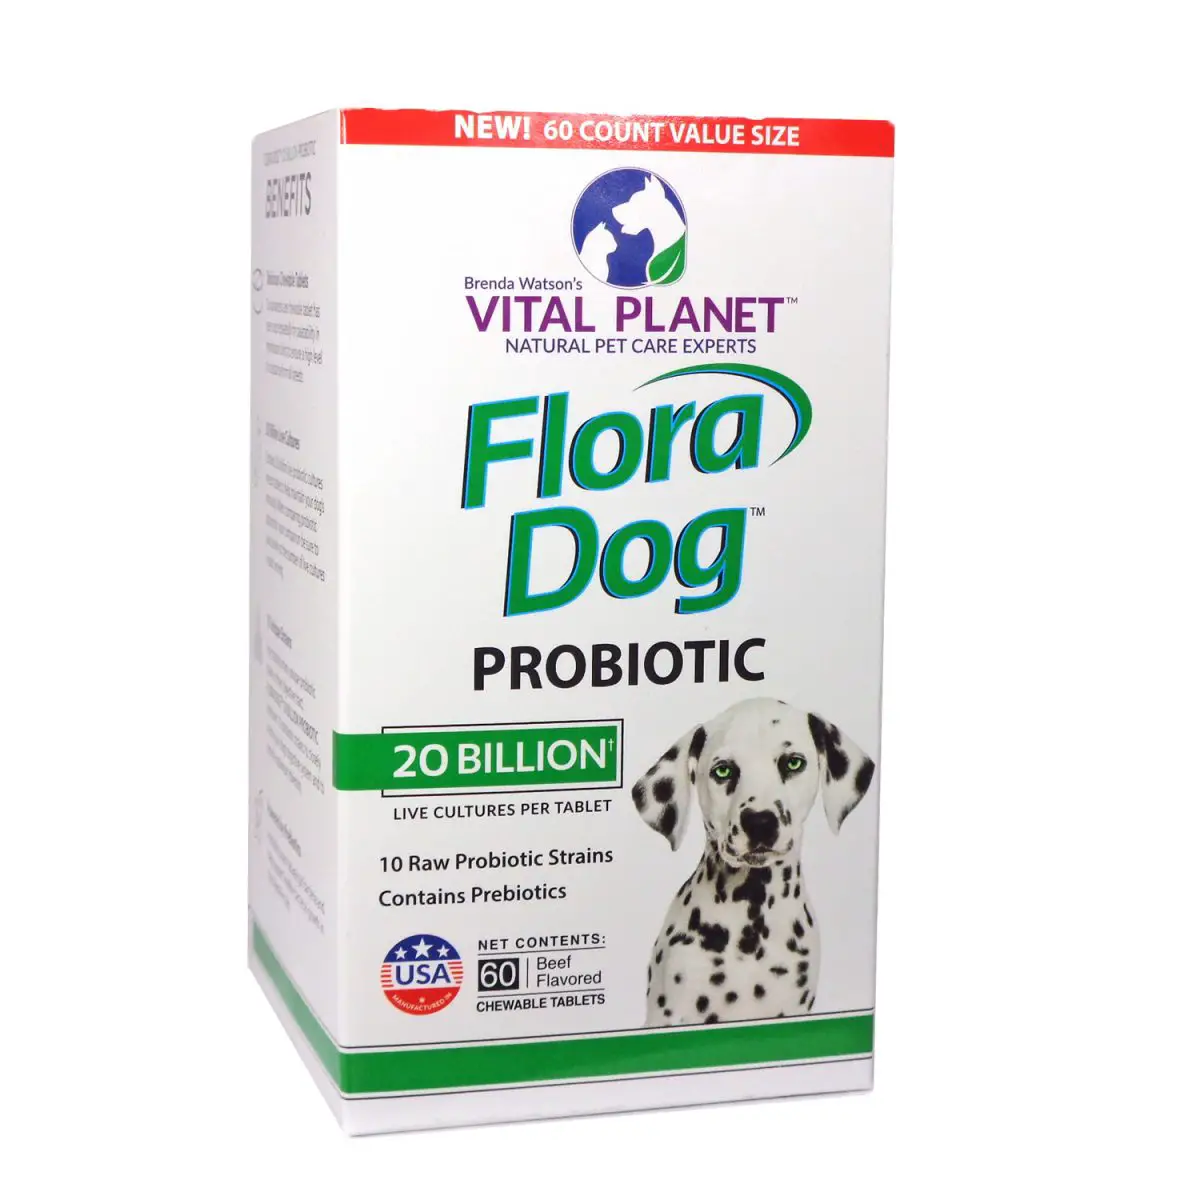 Flora Dog Probiotic by Vital Planet